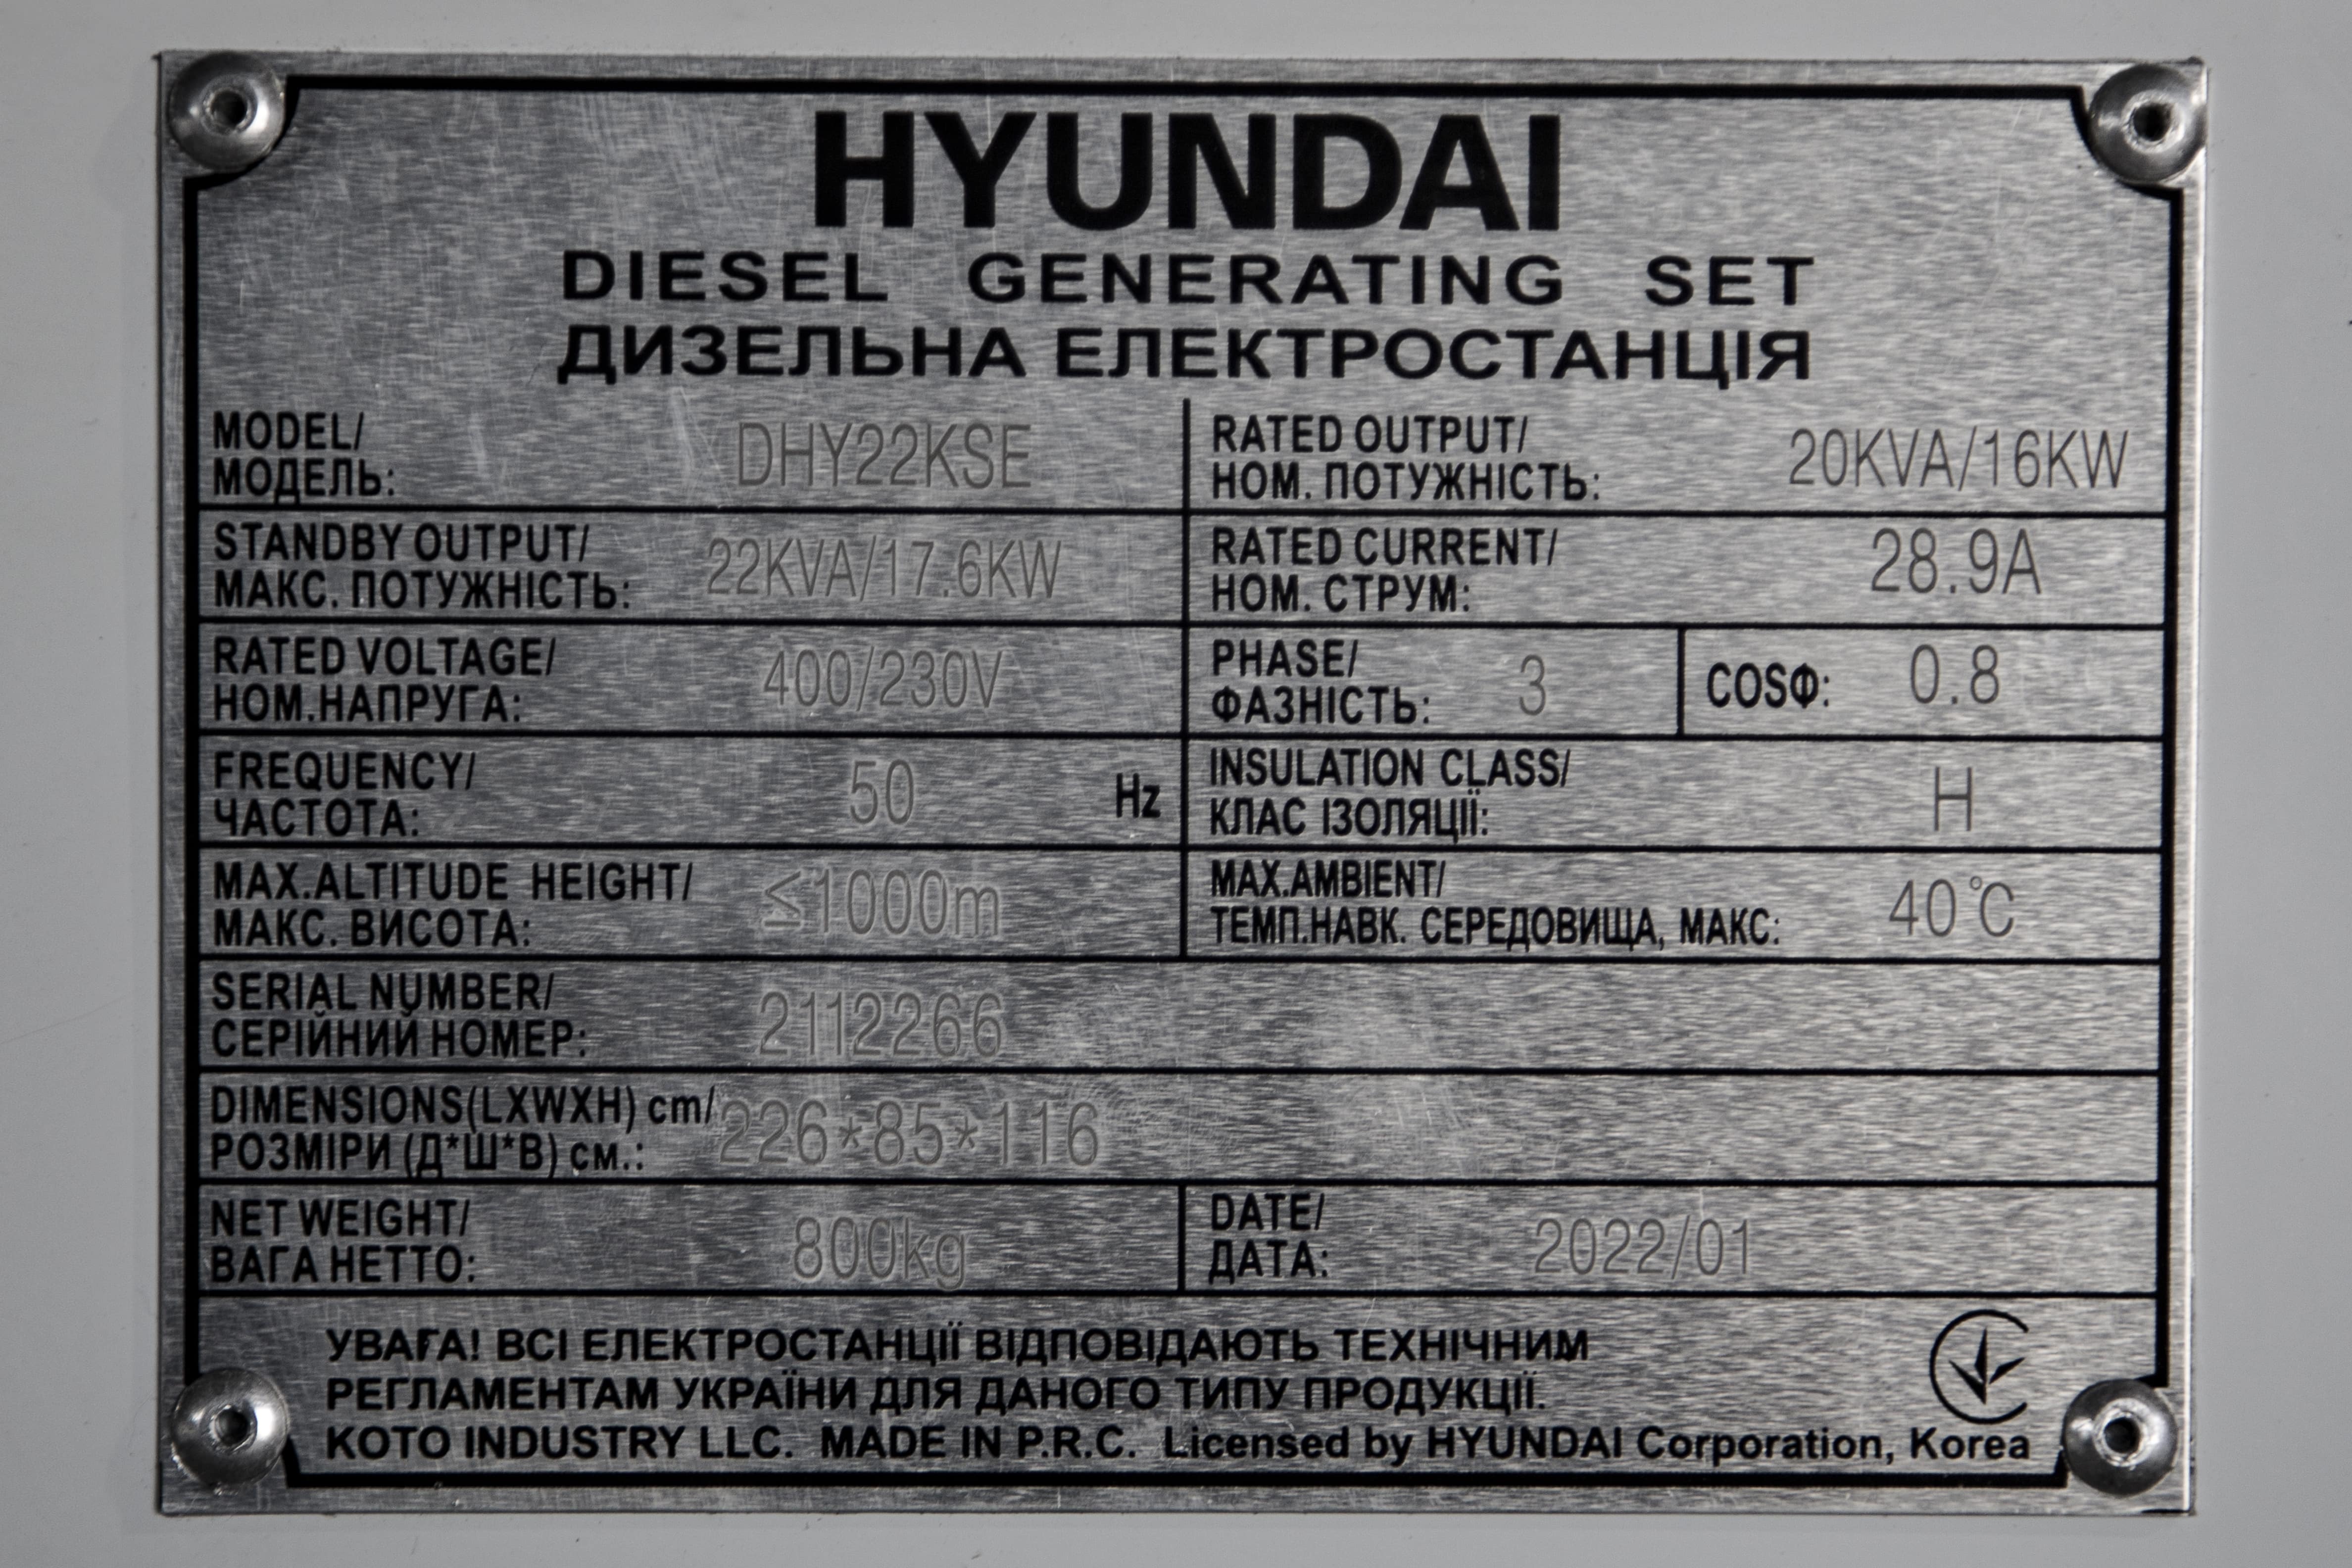 Генератор Hyundai DHY 22KSE ціна 368340 грн - фотографія 2